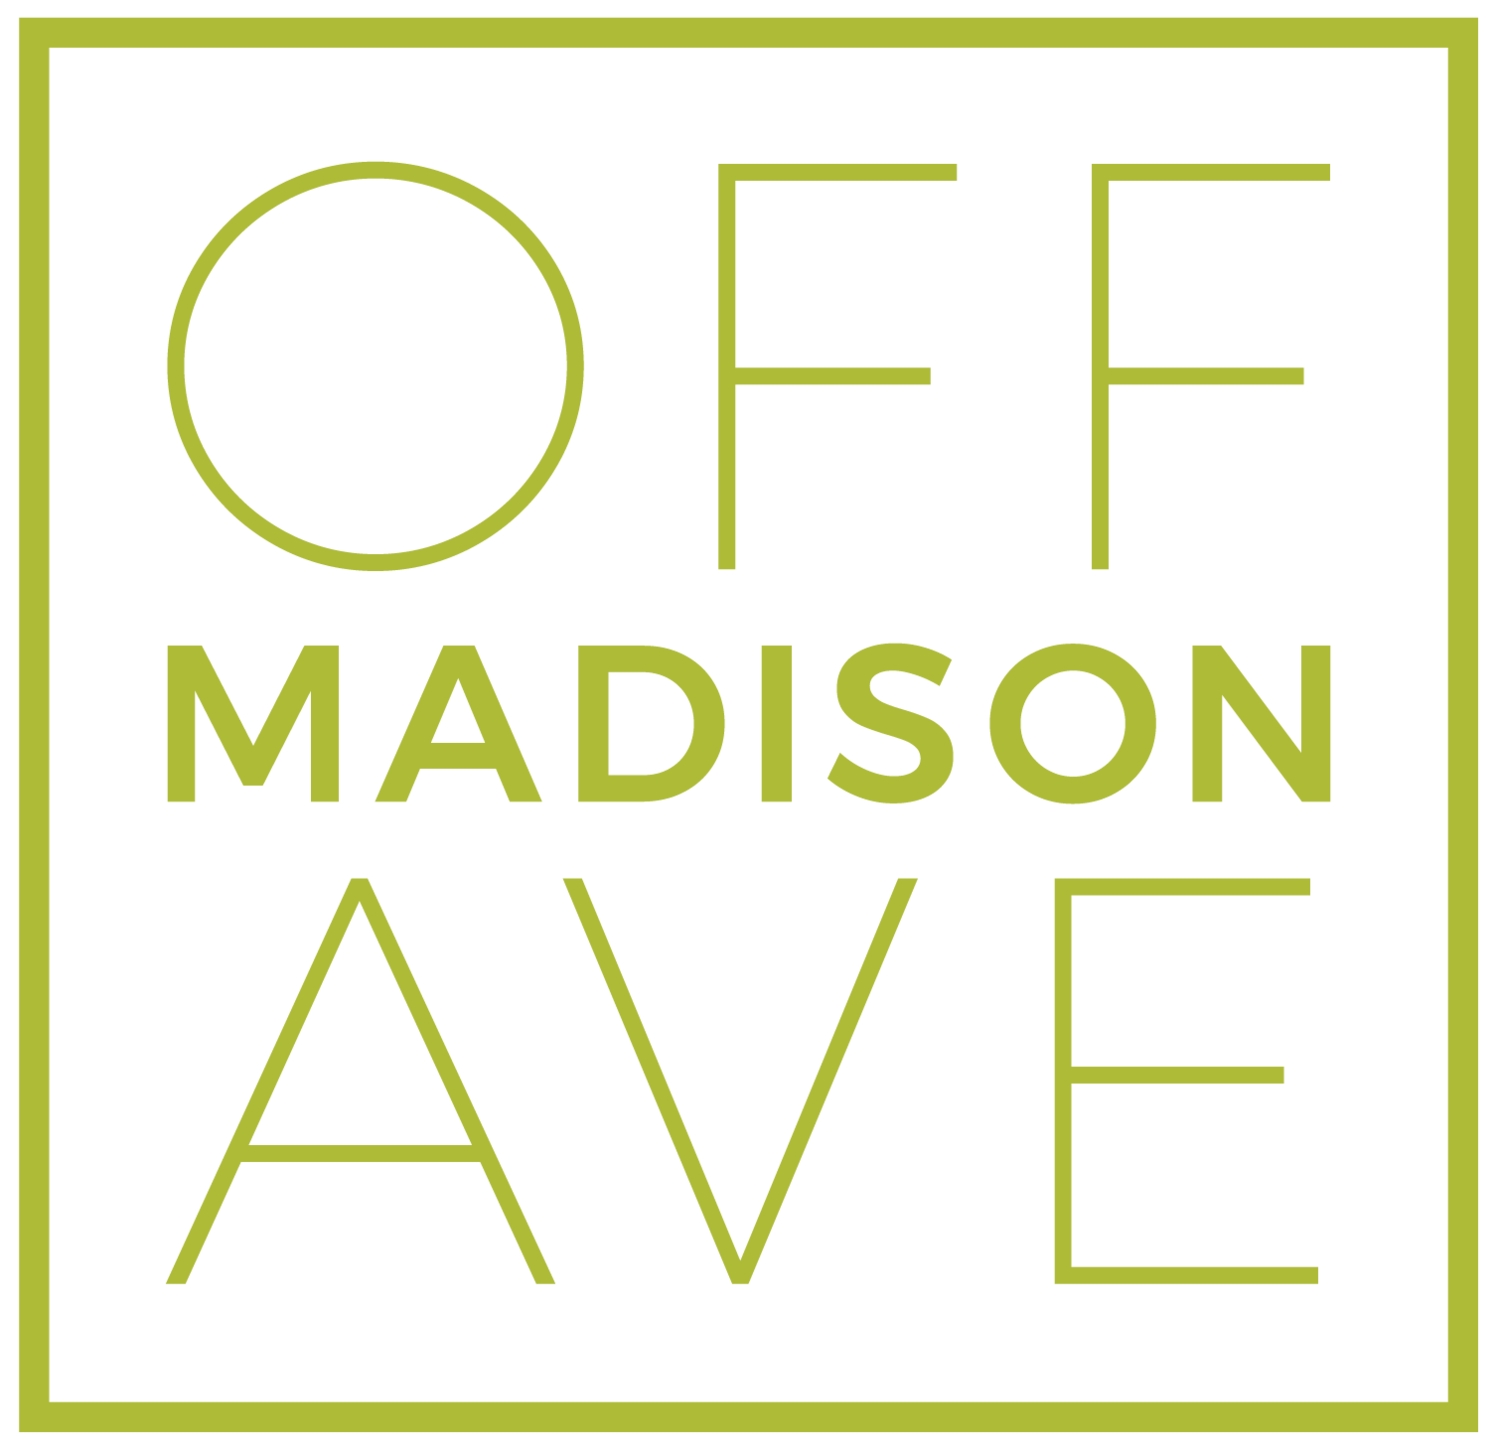 Off Madison Ave